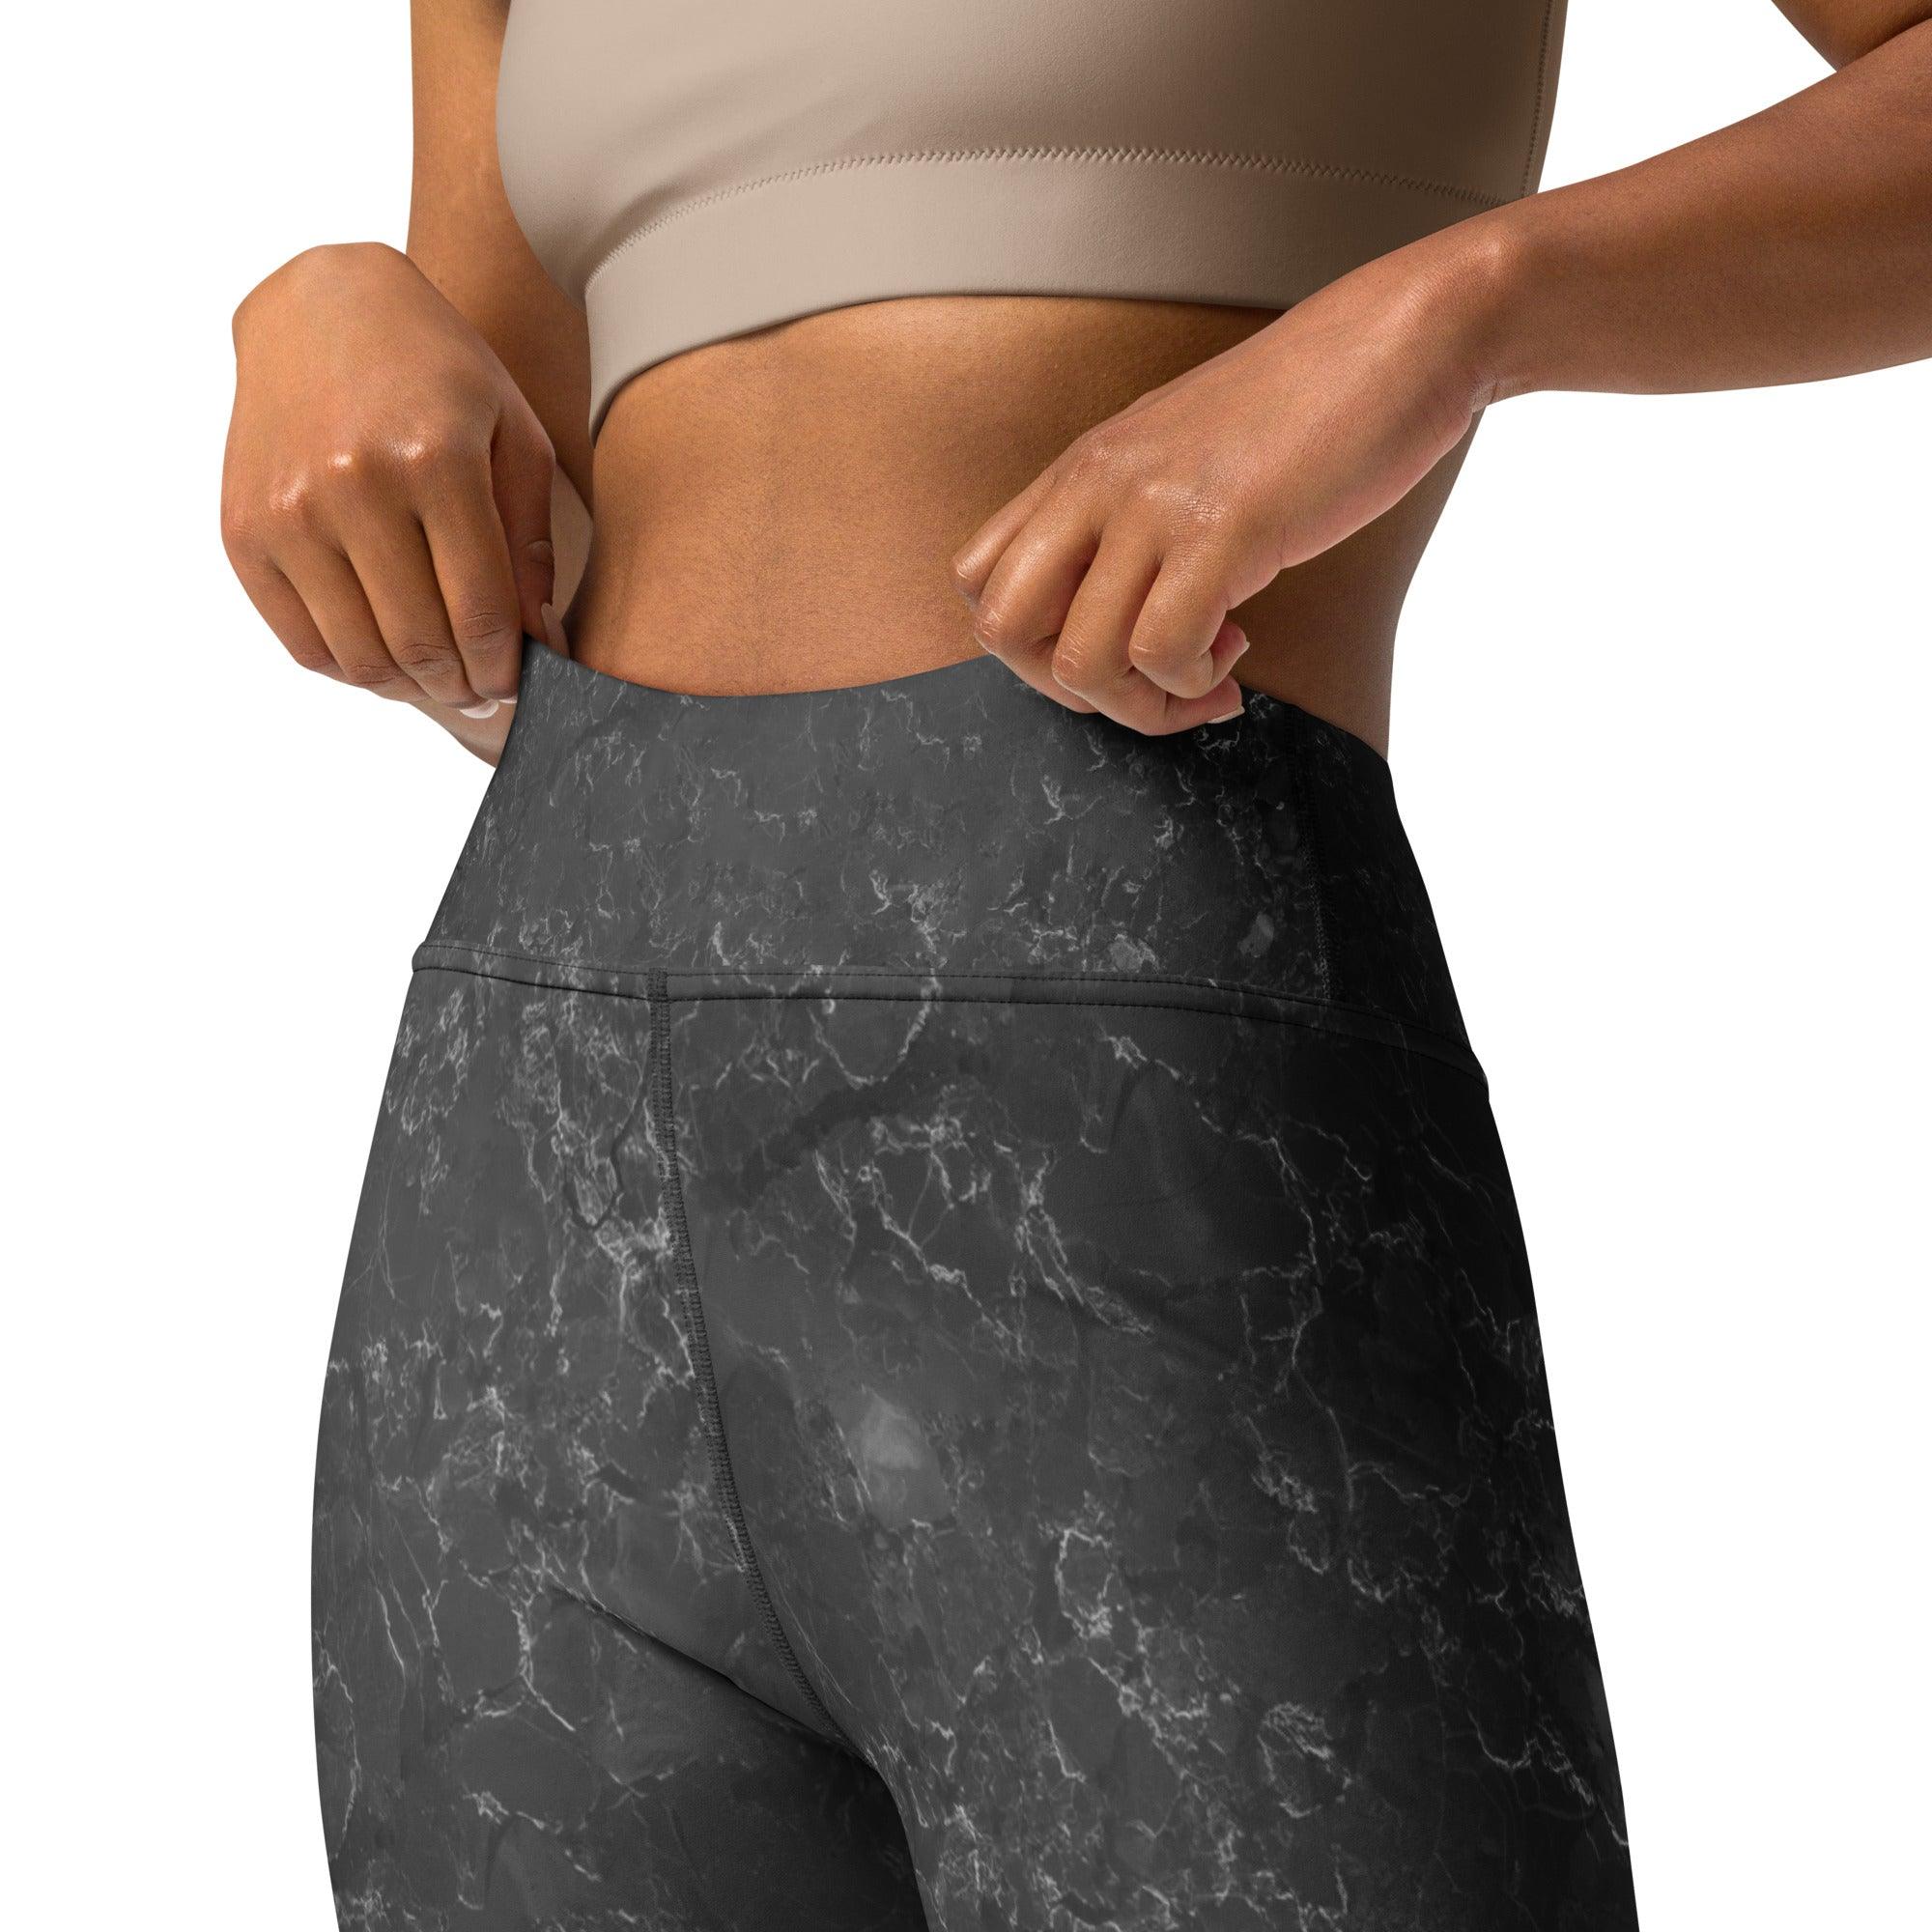 Close-up of grey yoga leggings fabric texture.